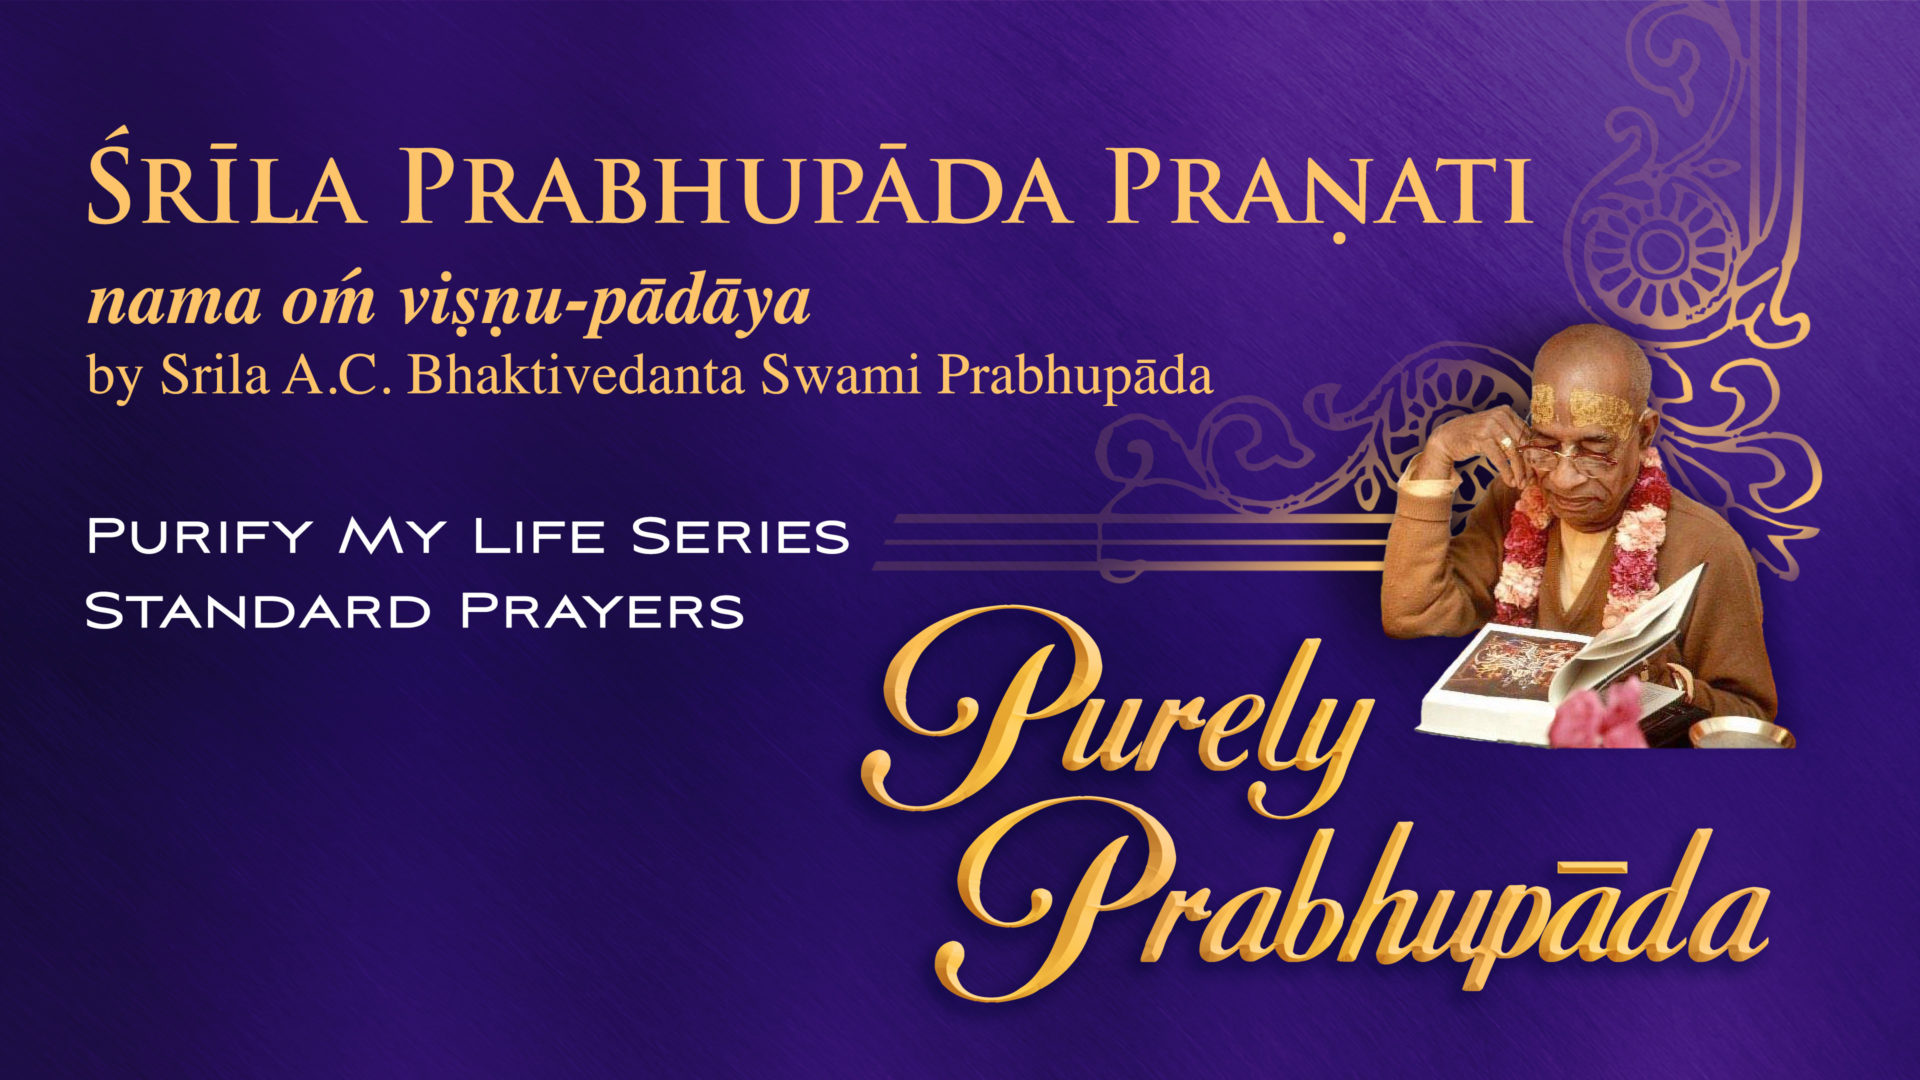 Śrīla Prabhupāda Pranati